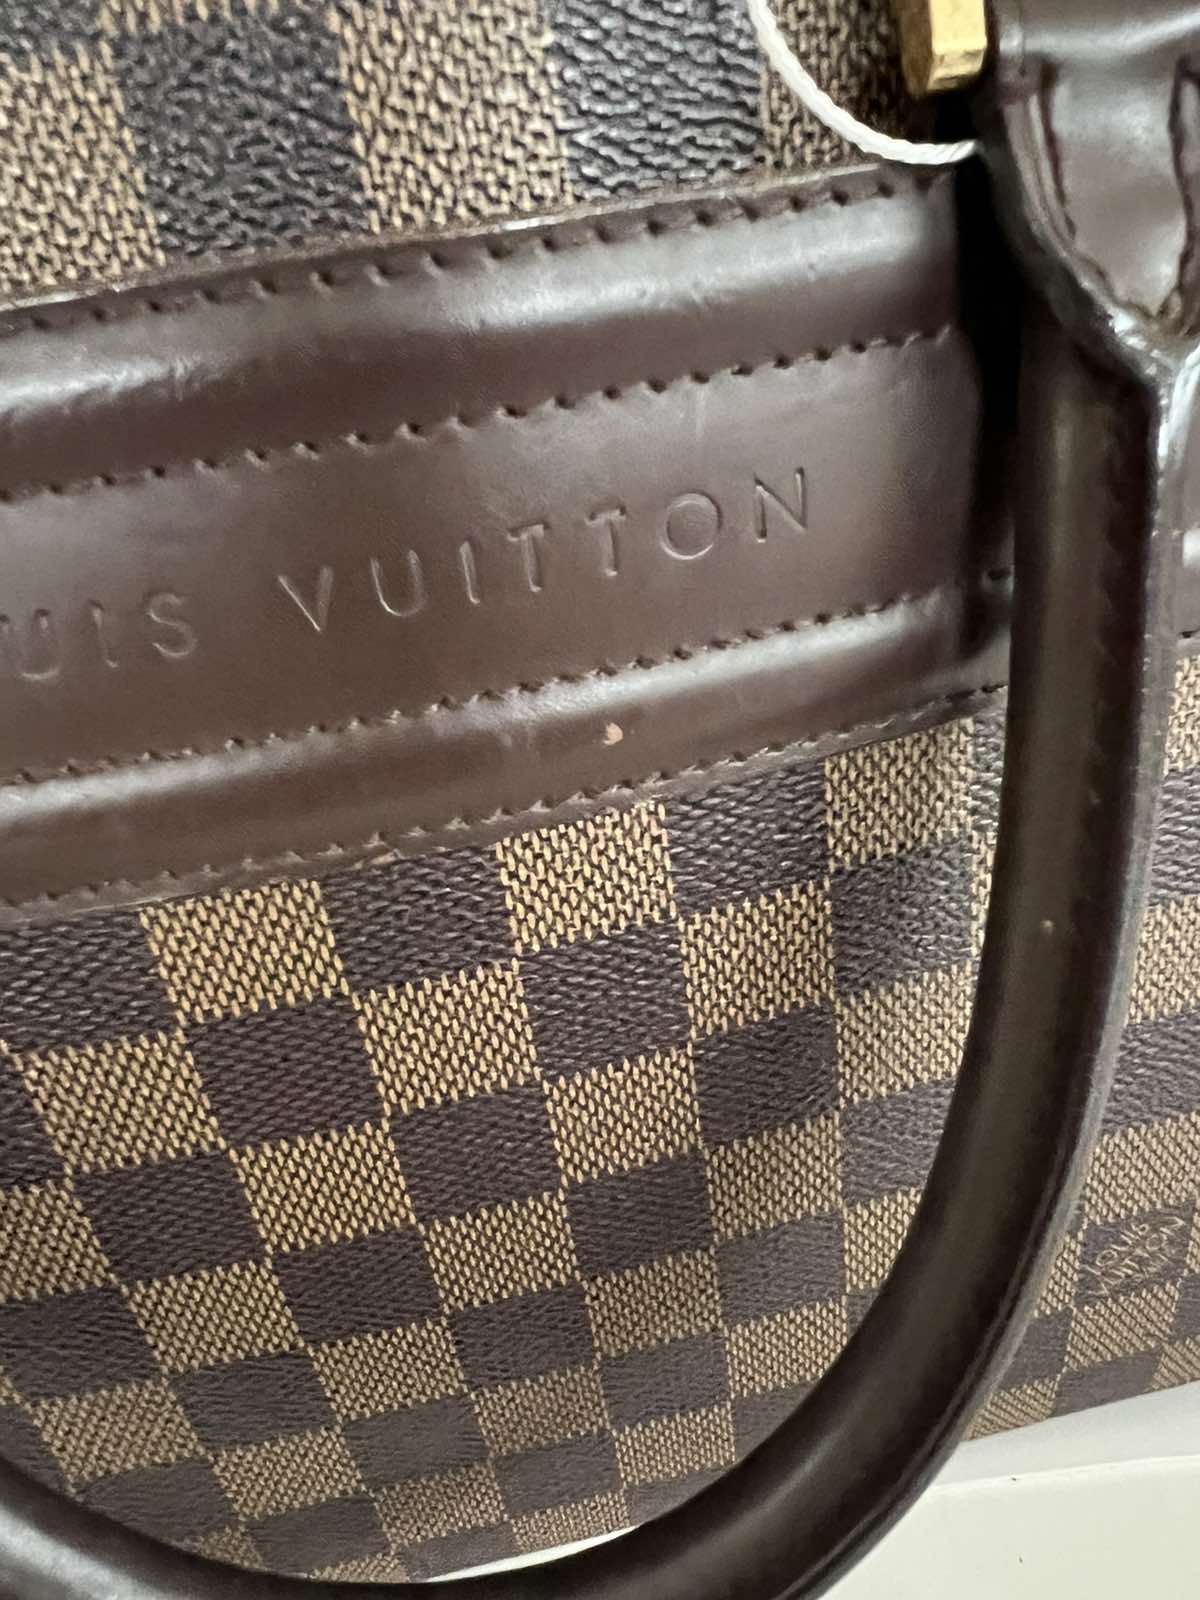 SOLD💕 Louis Vuitton Damier Ebene Nolita MM. Made in France.